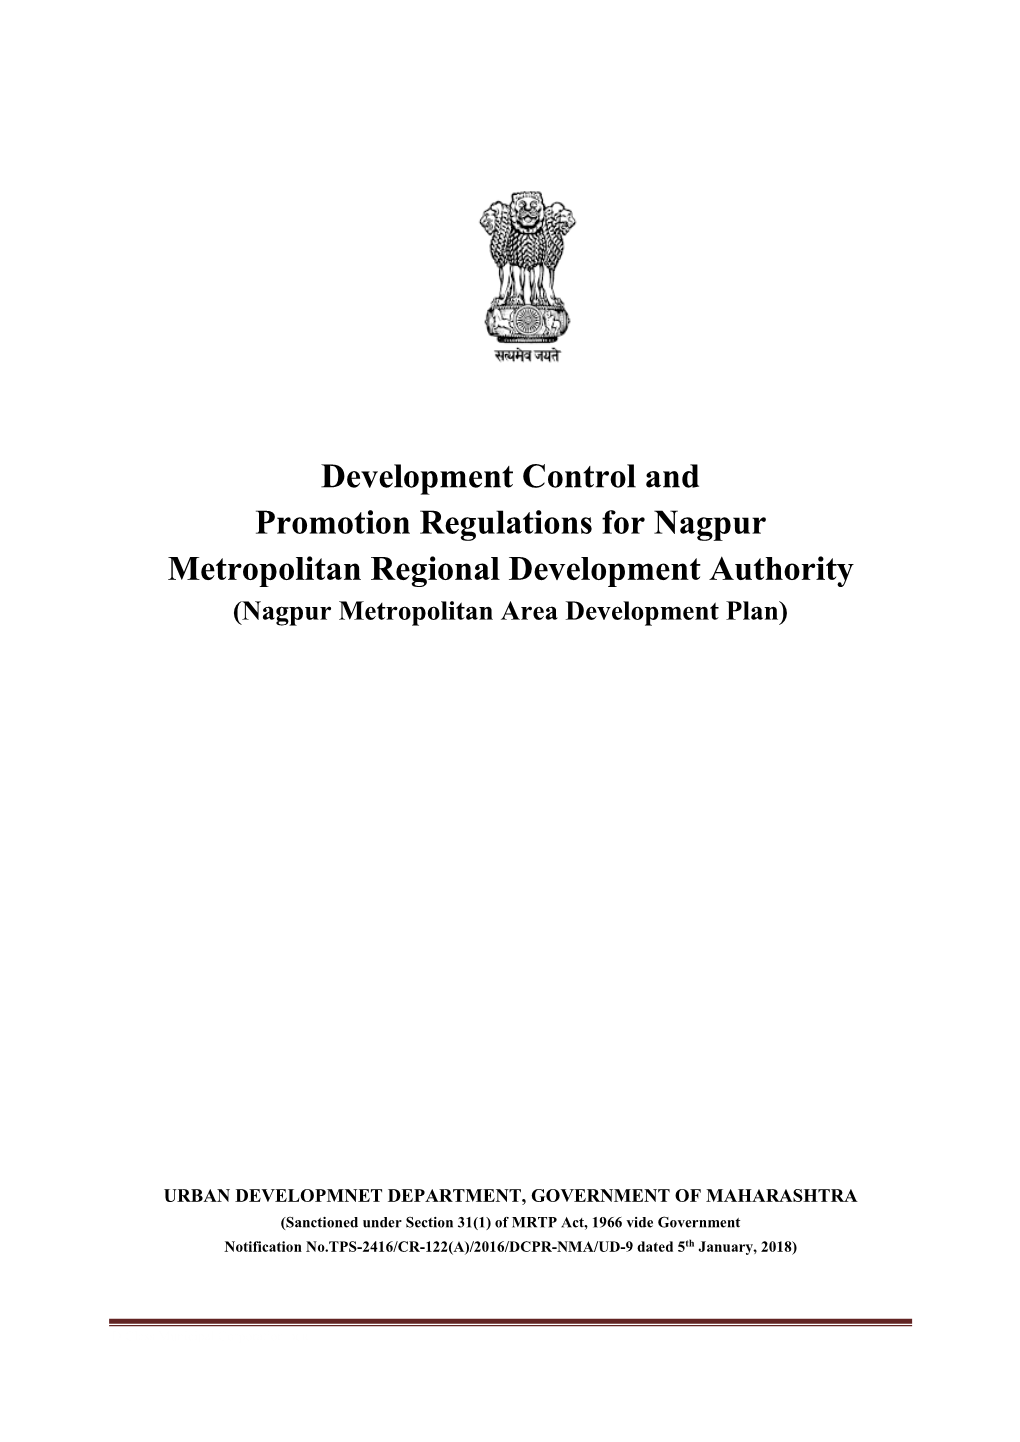 Development Control and Promotion Regulations for Nagpur Metropolitan Regional Development Authority (Nagpur Metropolitan Area Development Plan)